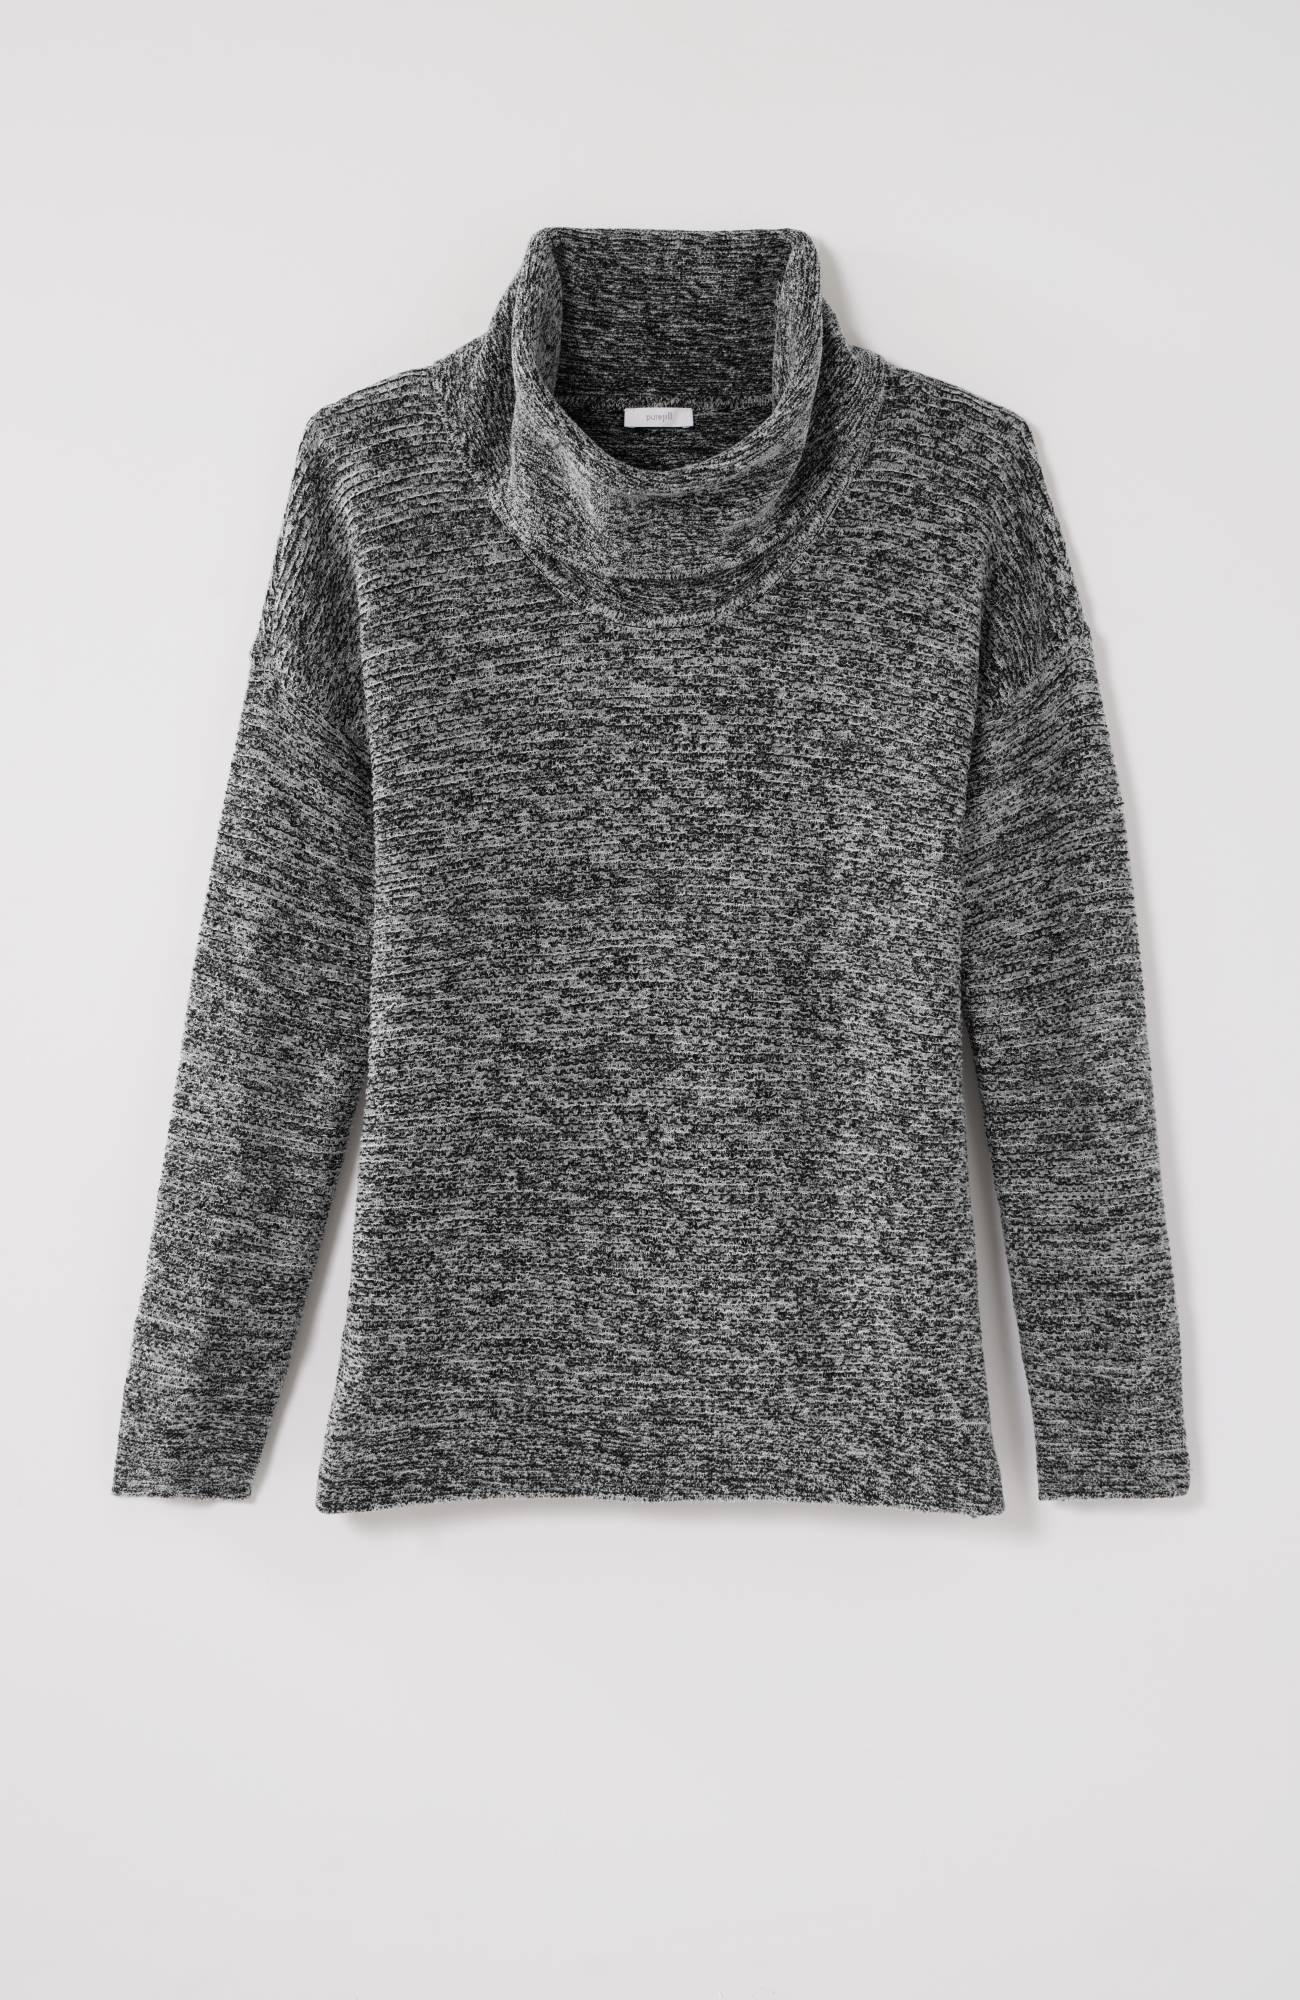 J.Jill Color Block Tan Pullover Sweater Size L - 68% off